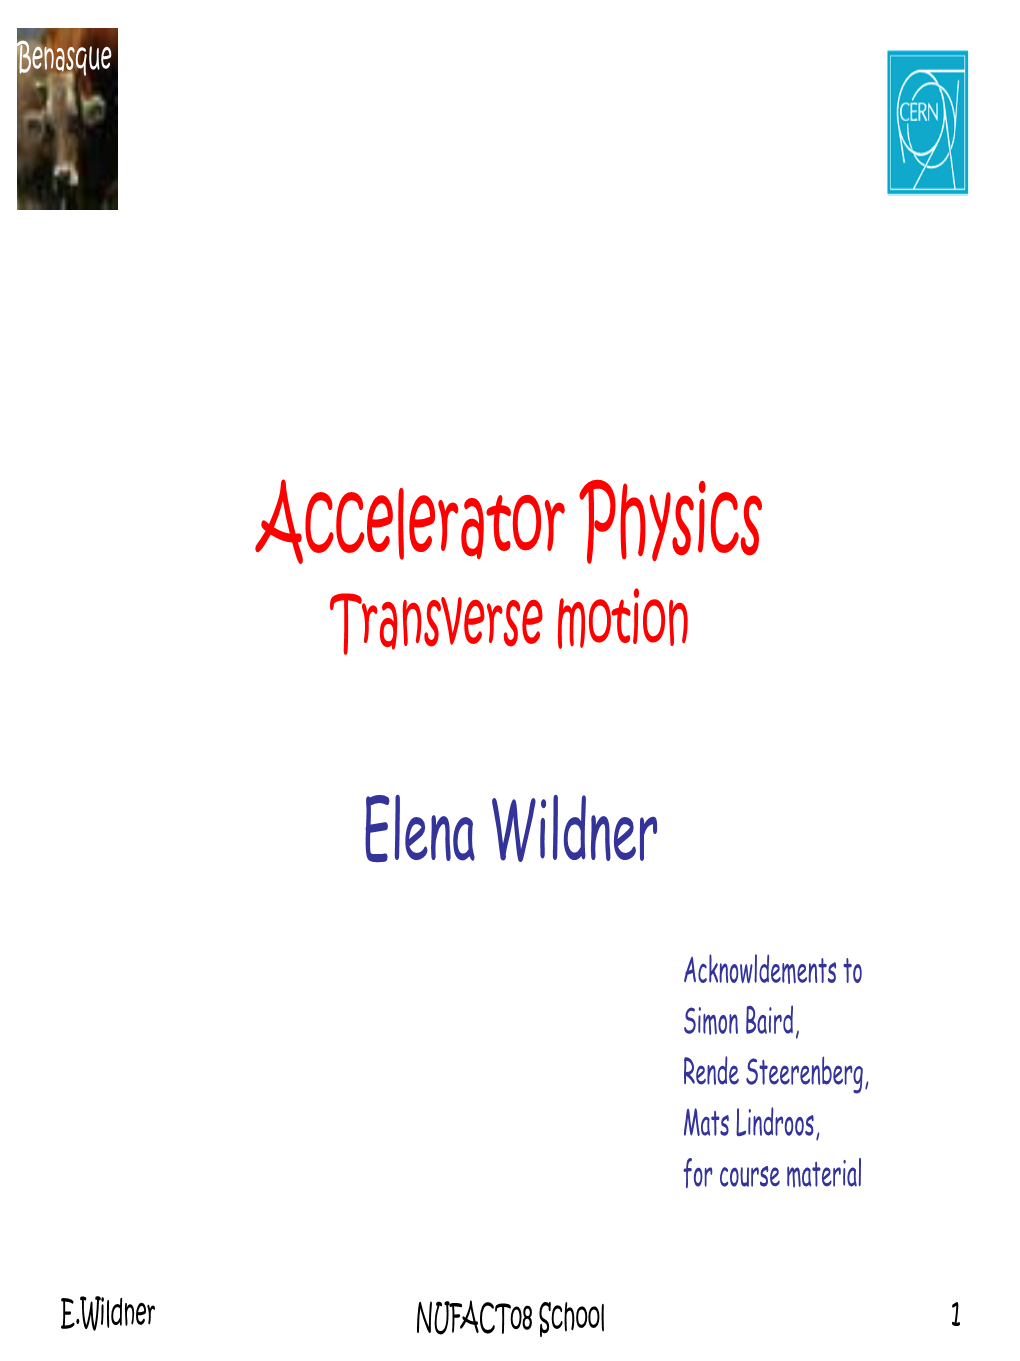 Accelerator Physics 1